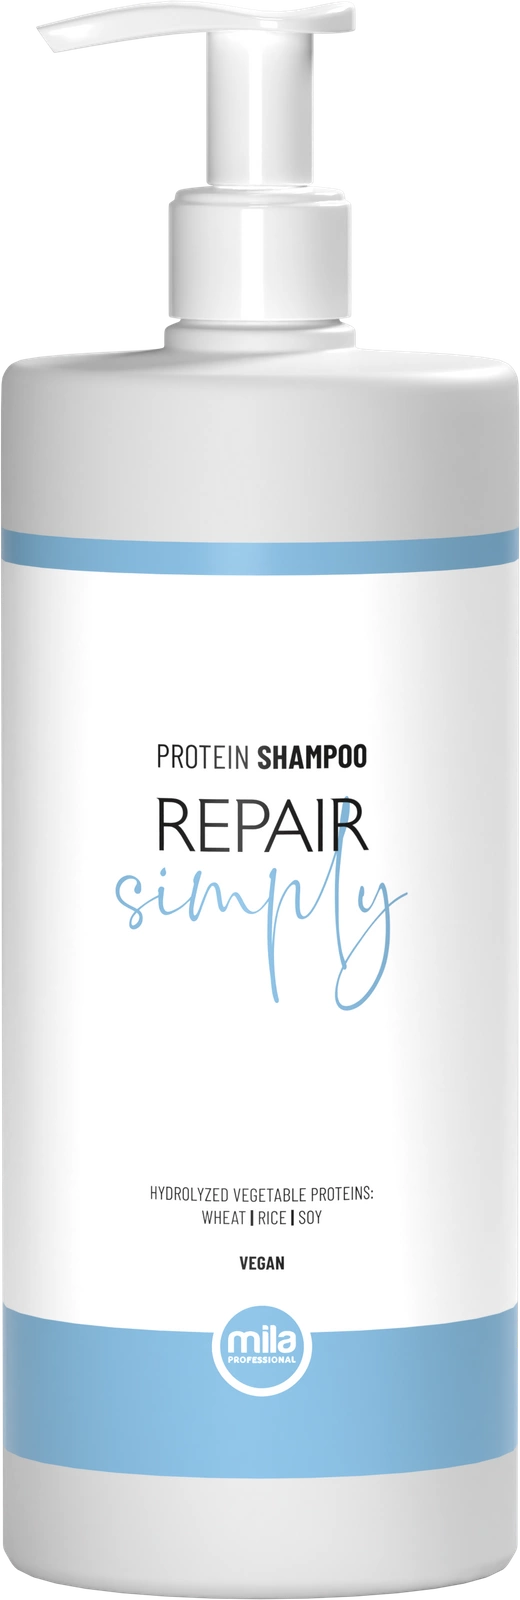 protein repair szampon z rosji